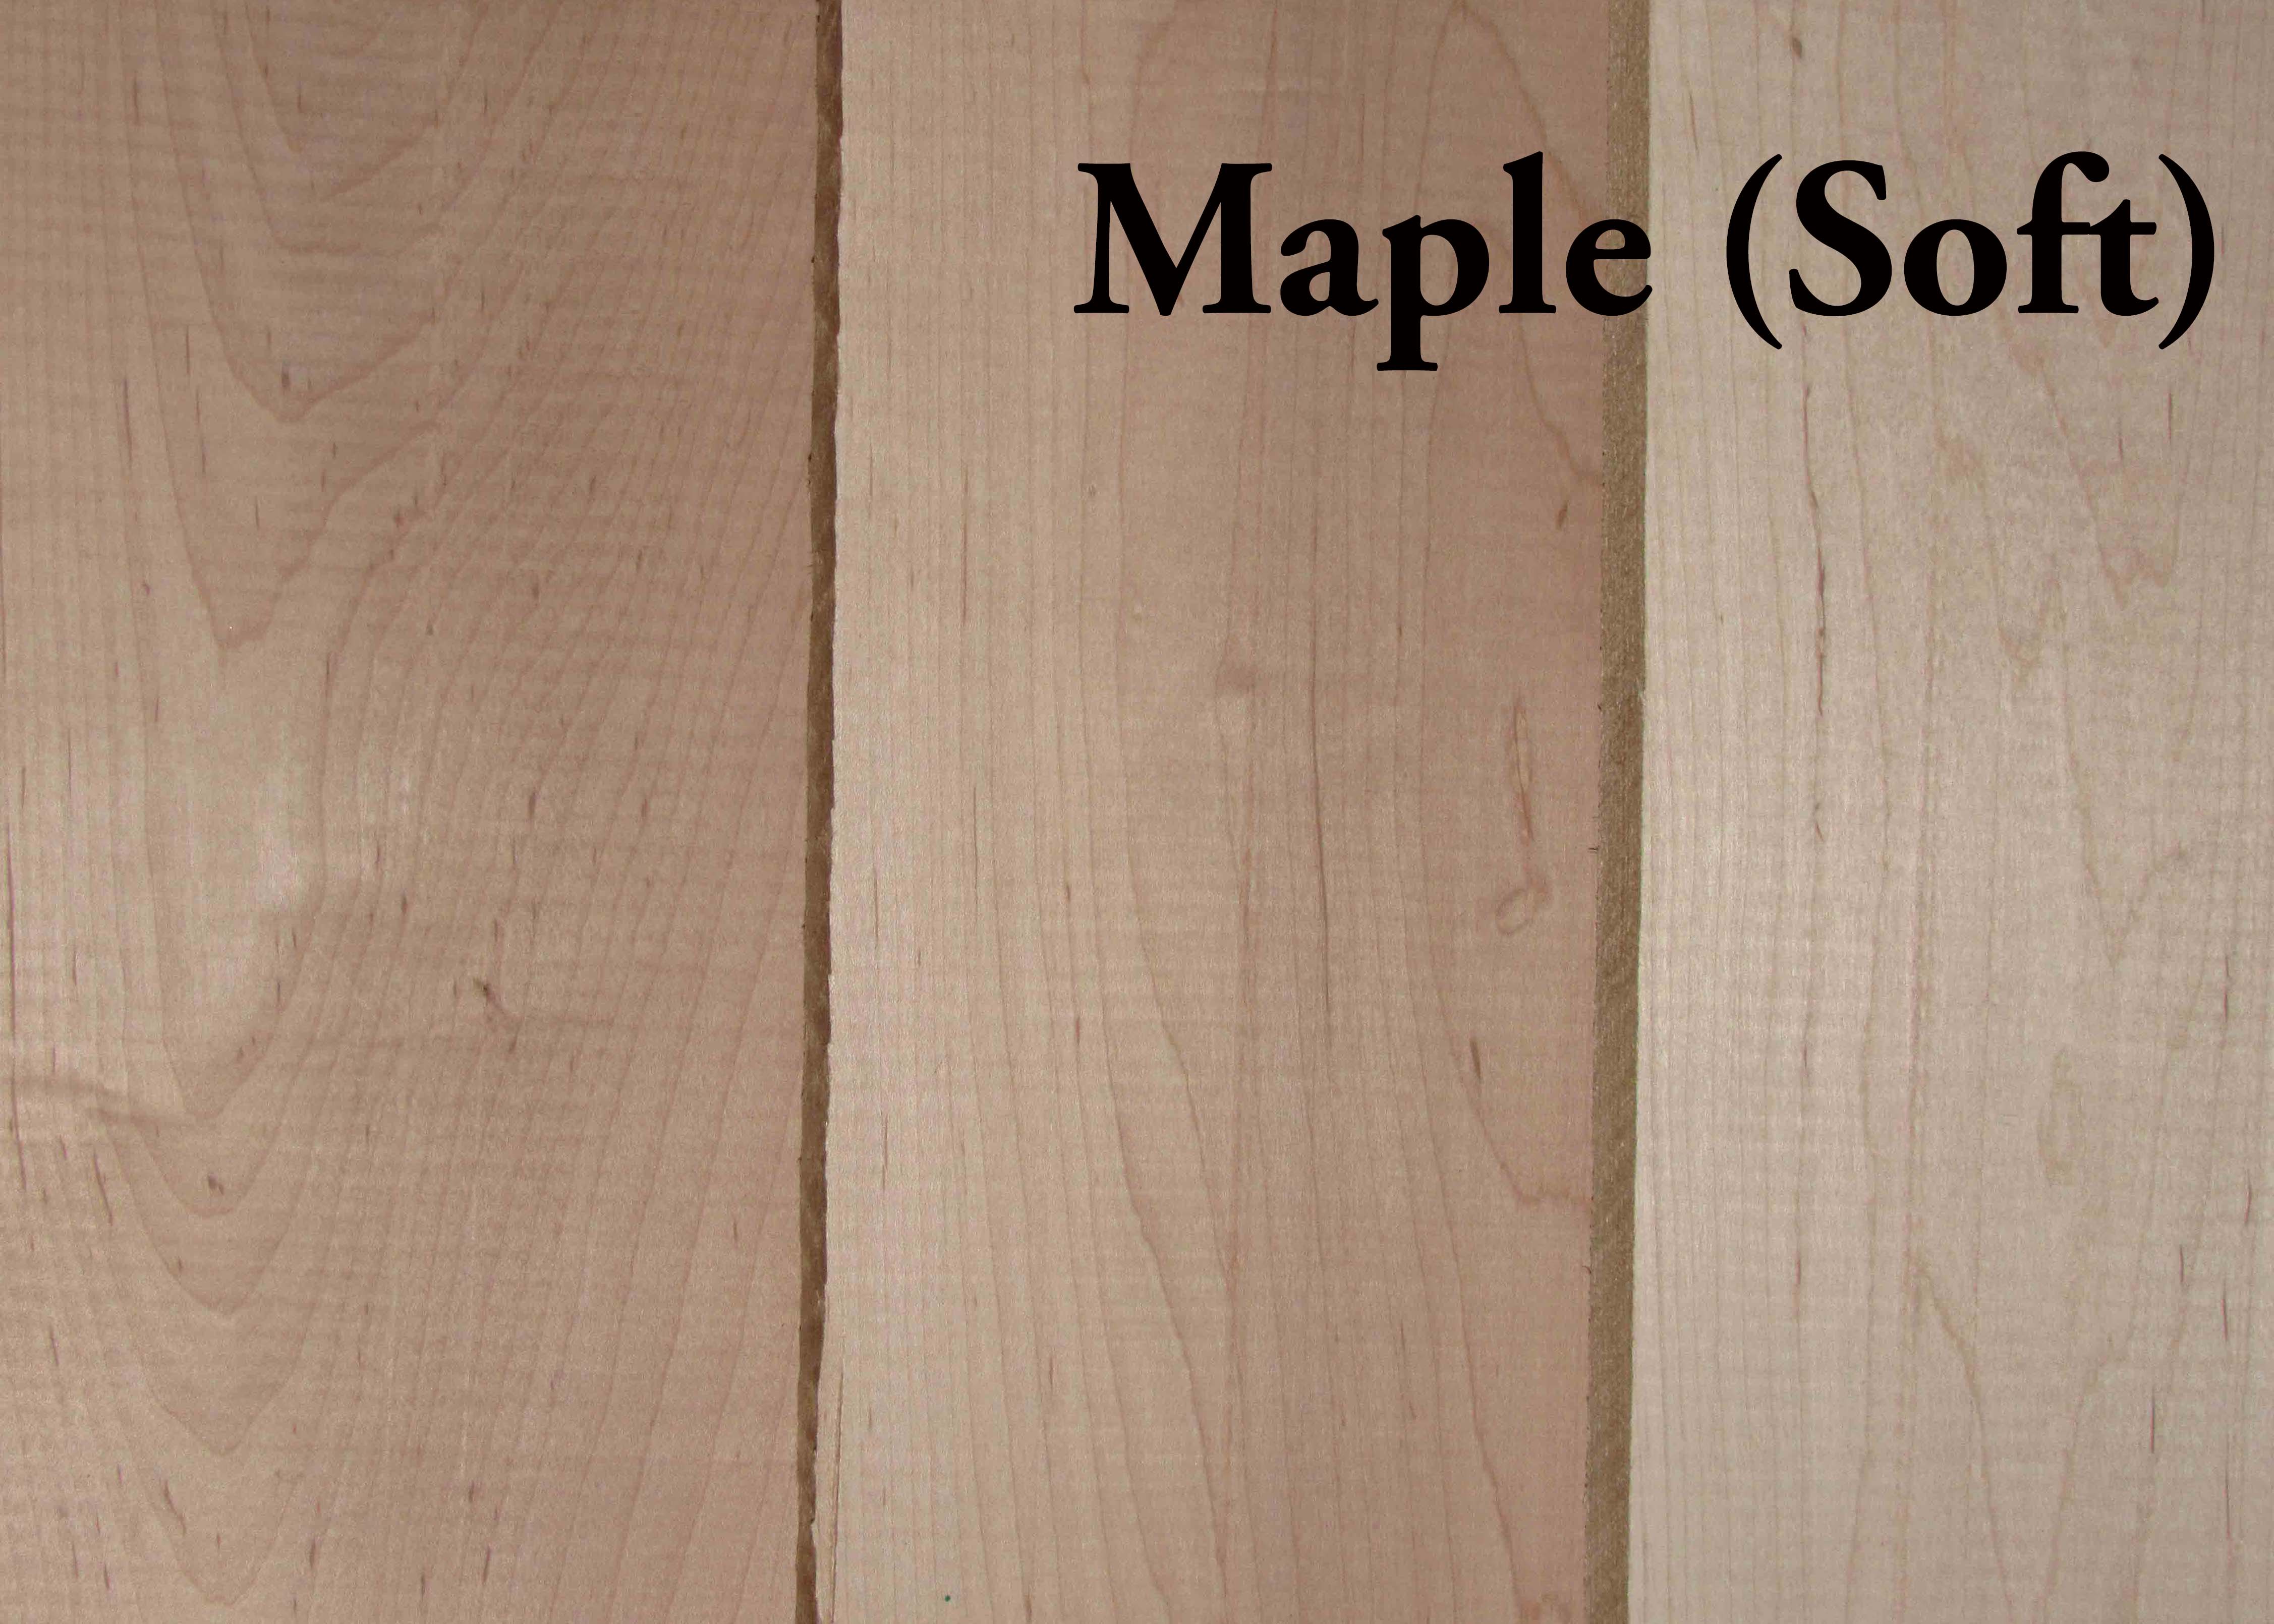 Maple (Soft) Hardwood S4S | Capitol City Lumber